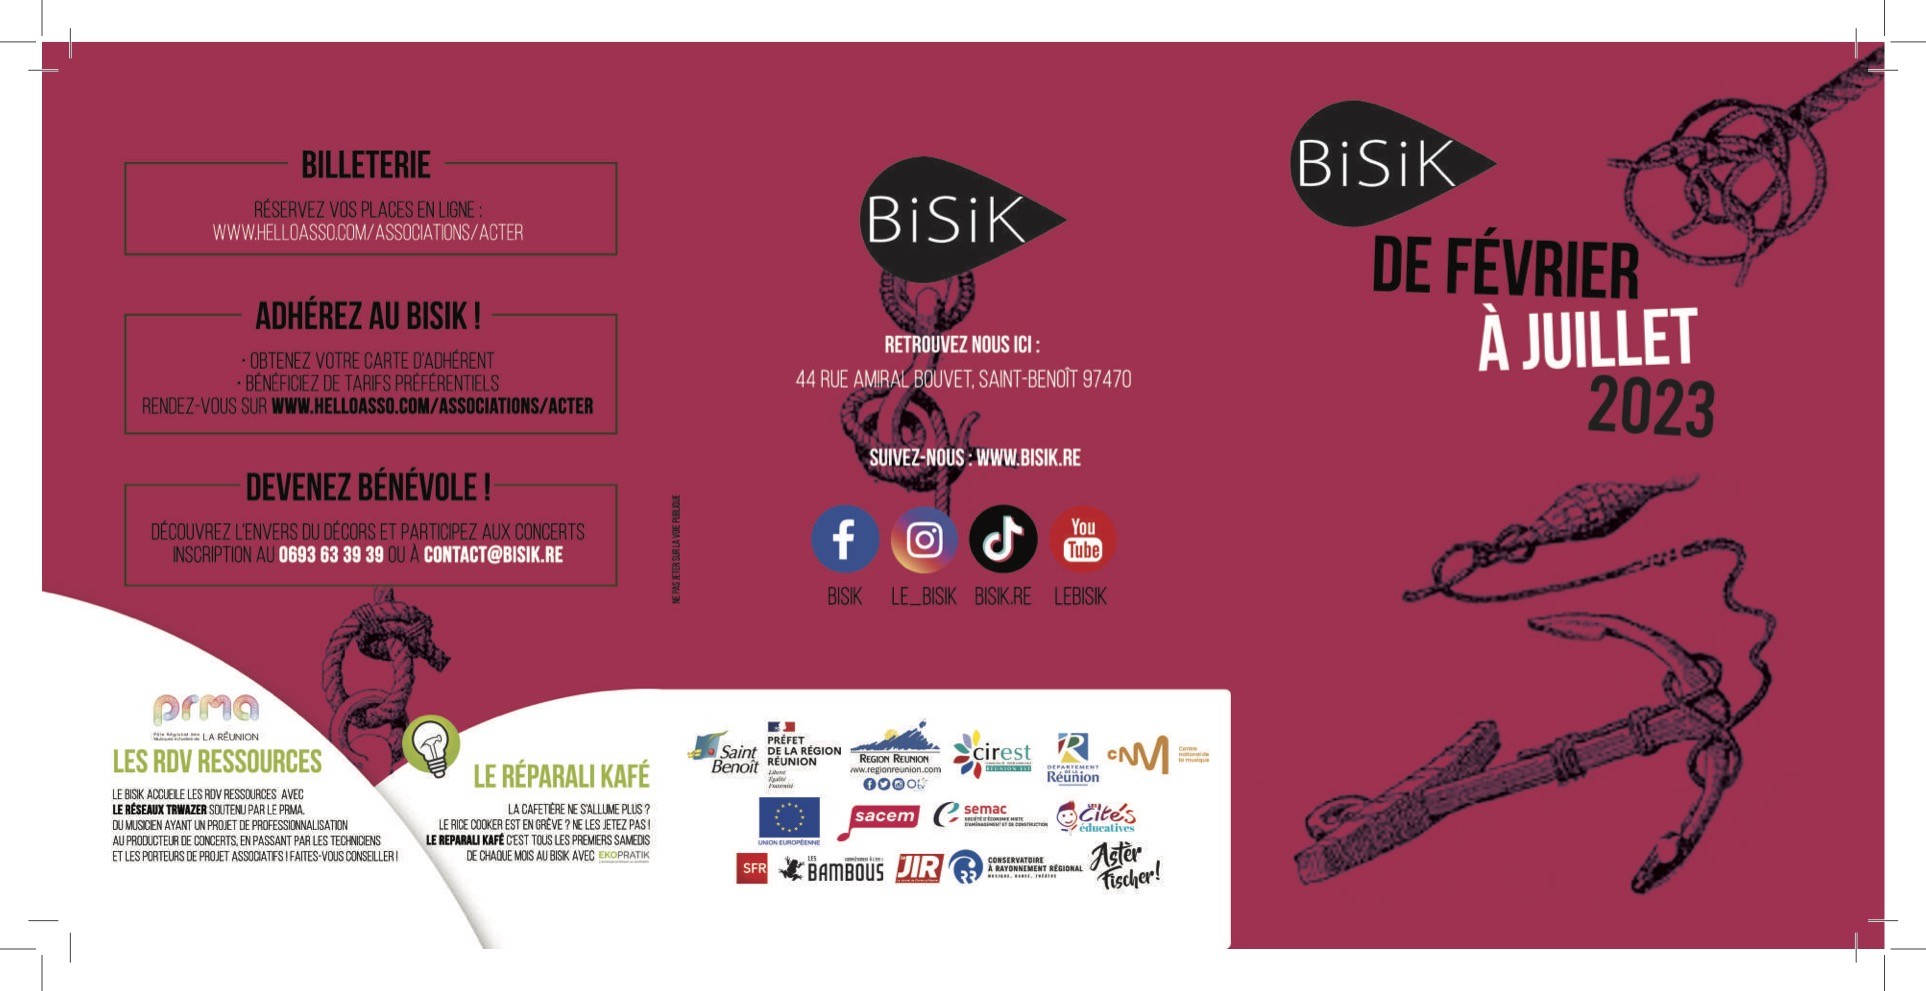 BISIK : Programme de Février à Juillet 2023